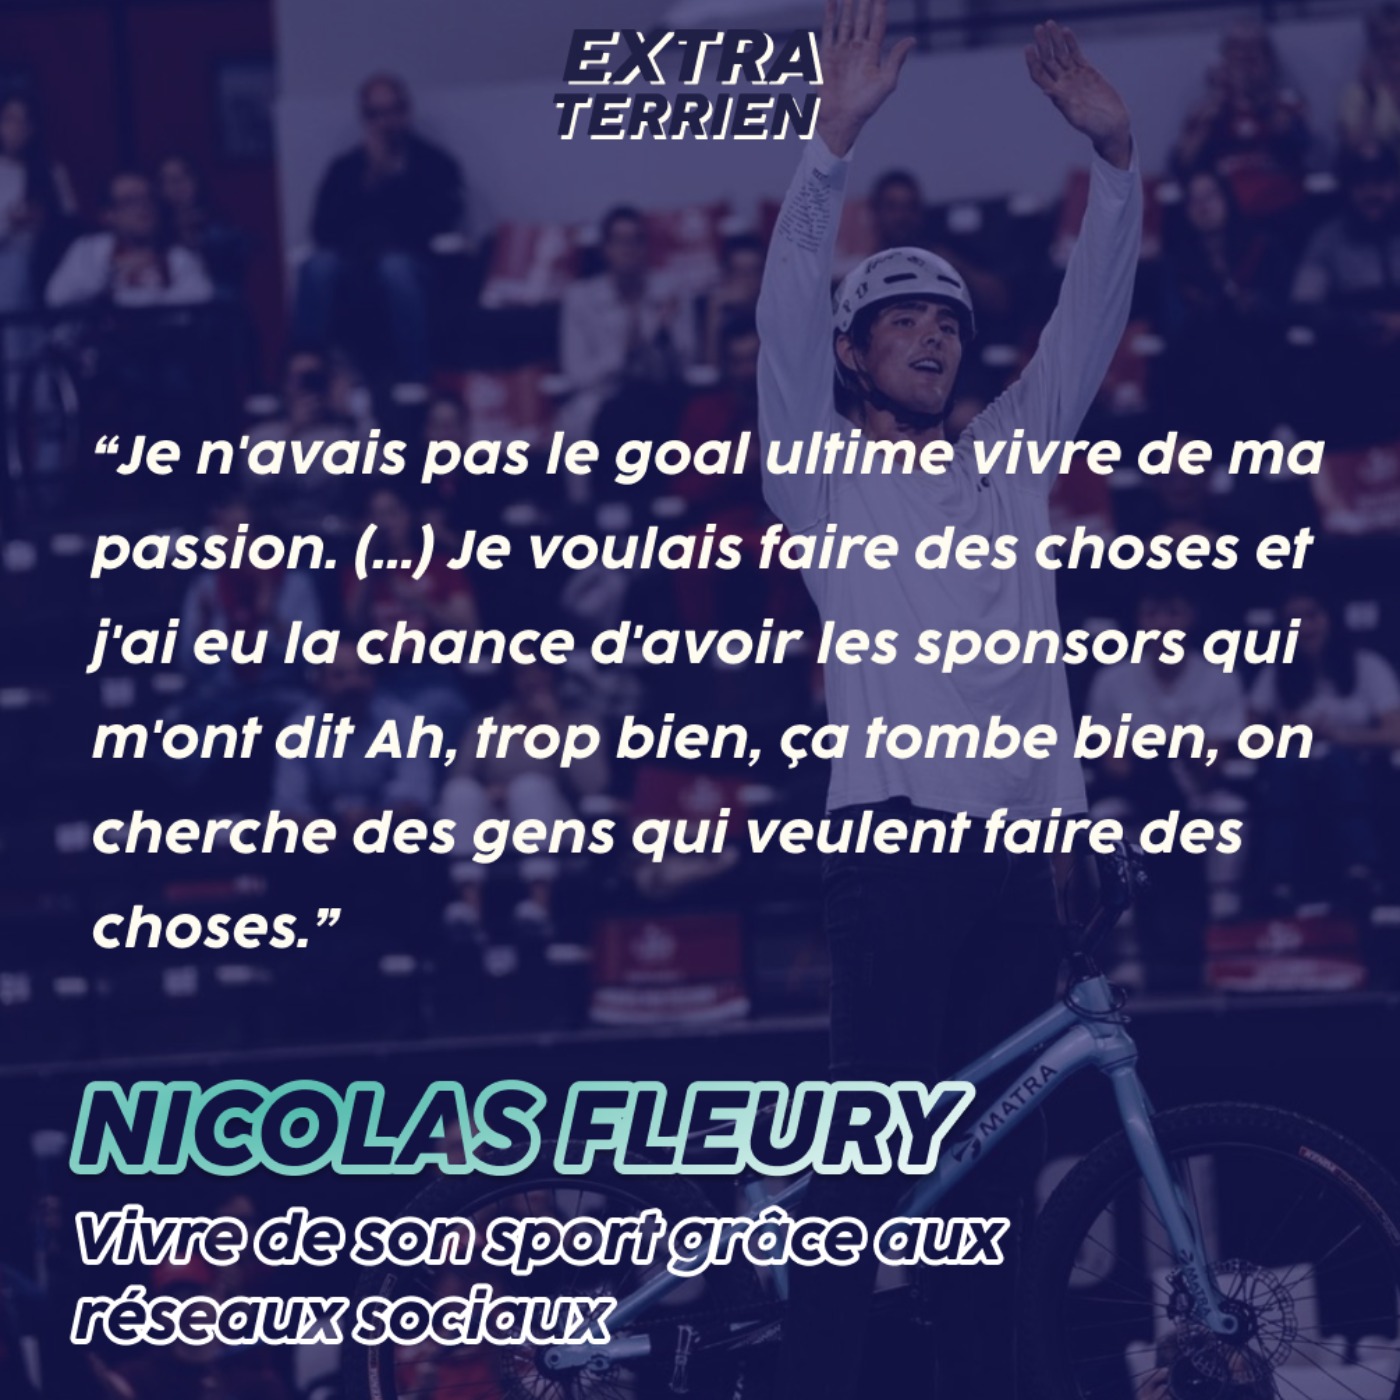 Extrait - Nicolas Fleury